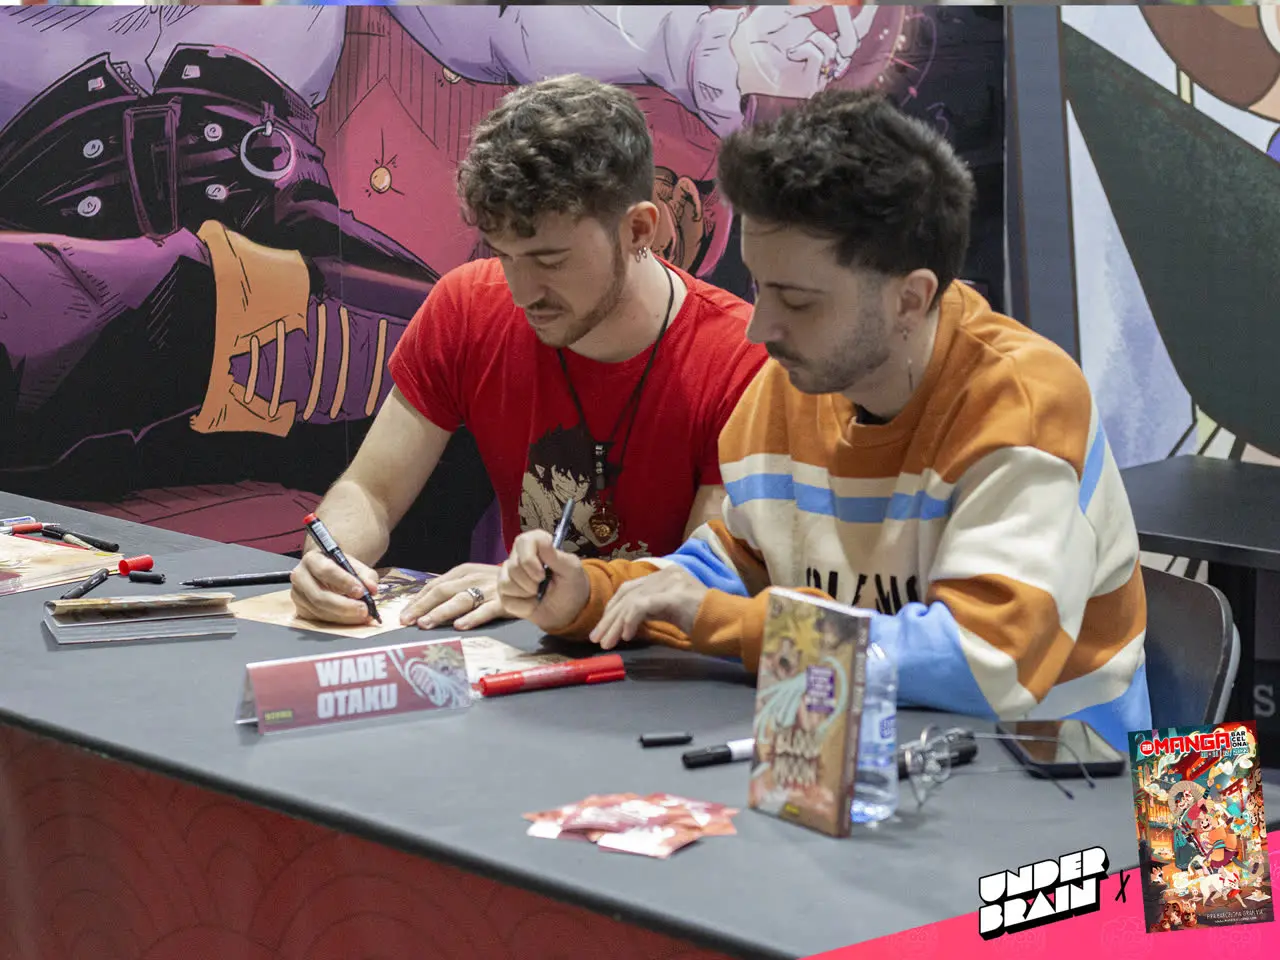 Wade Otaku y Drawill firmando durante el 28 Manga BCN